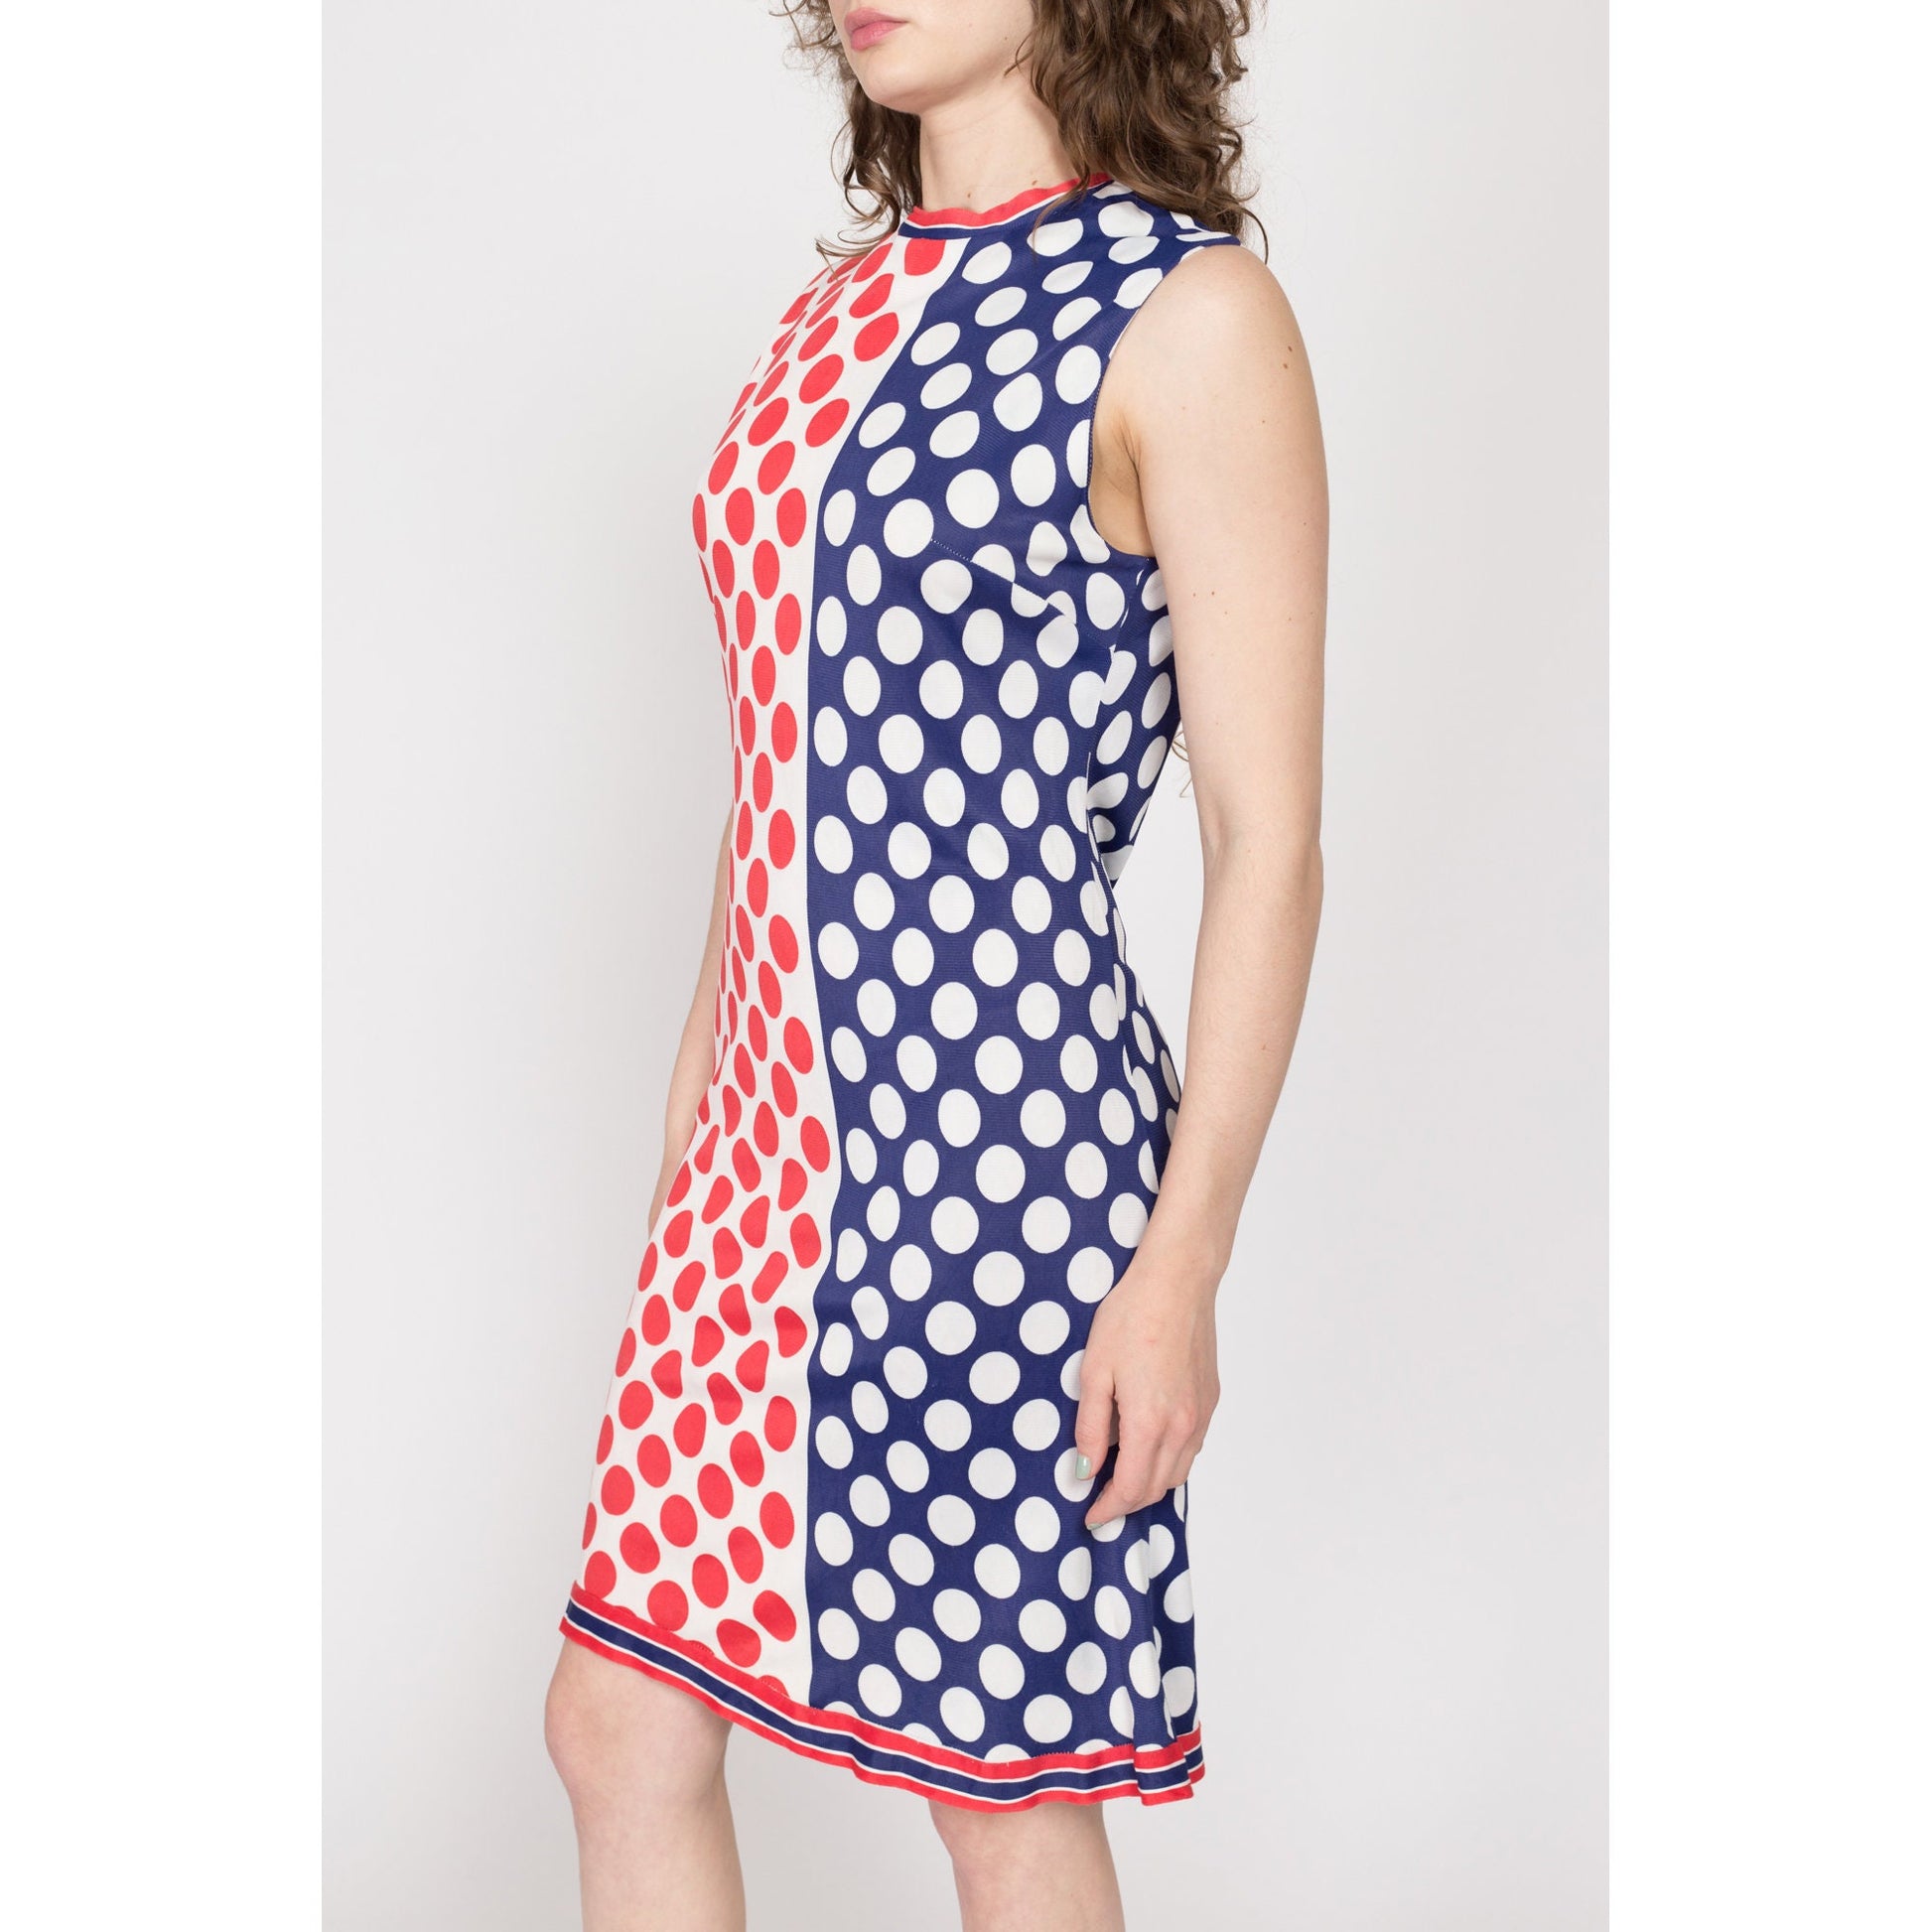 Medium 60s Red White & Blue Polka Dot Mod Mini Dress | Vintage Retro Sleeveless Color Block A Line Dress